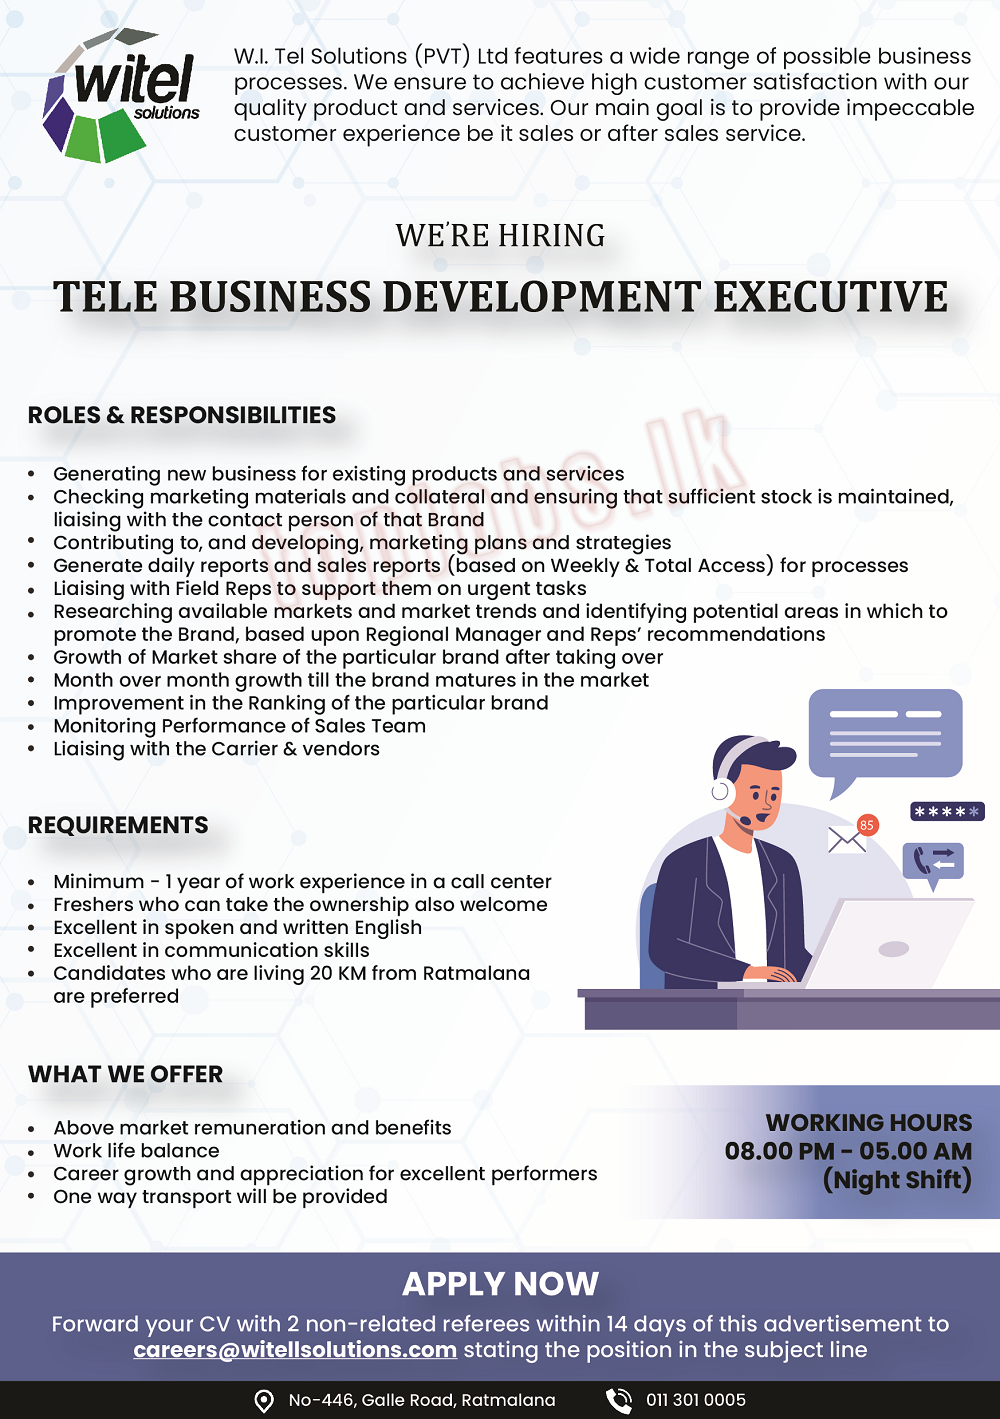 Tele Business Development Executive